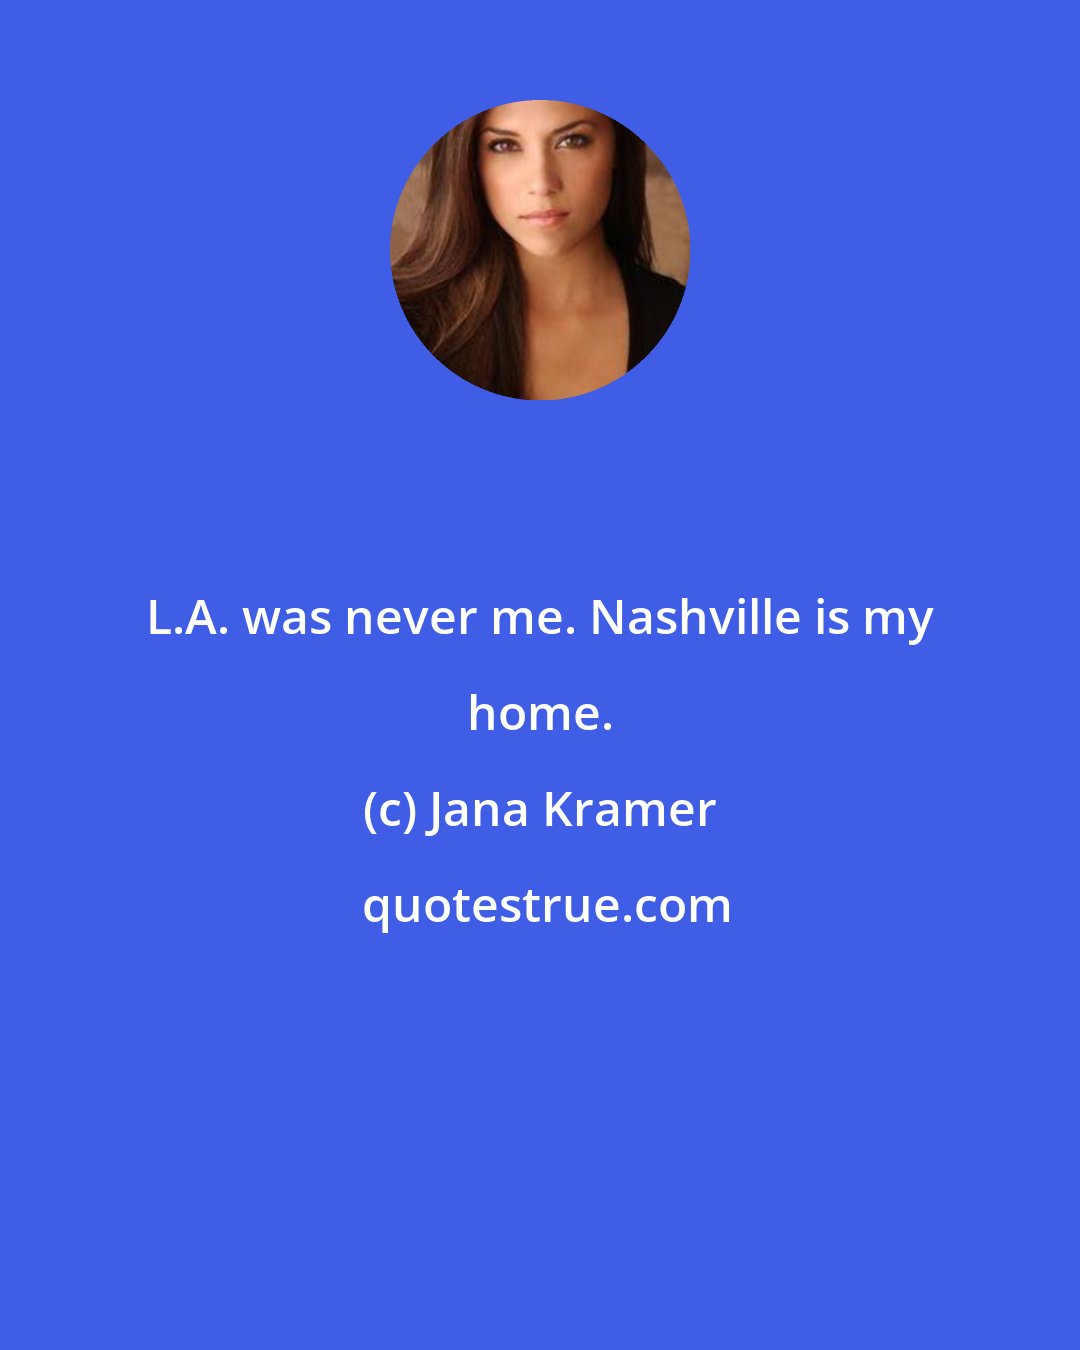 Jana Kramer: L.A. was never me. Nashville is my home.